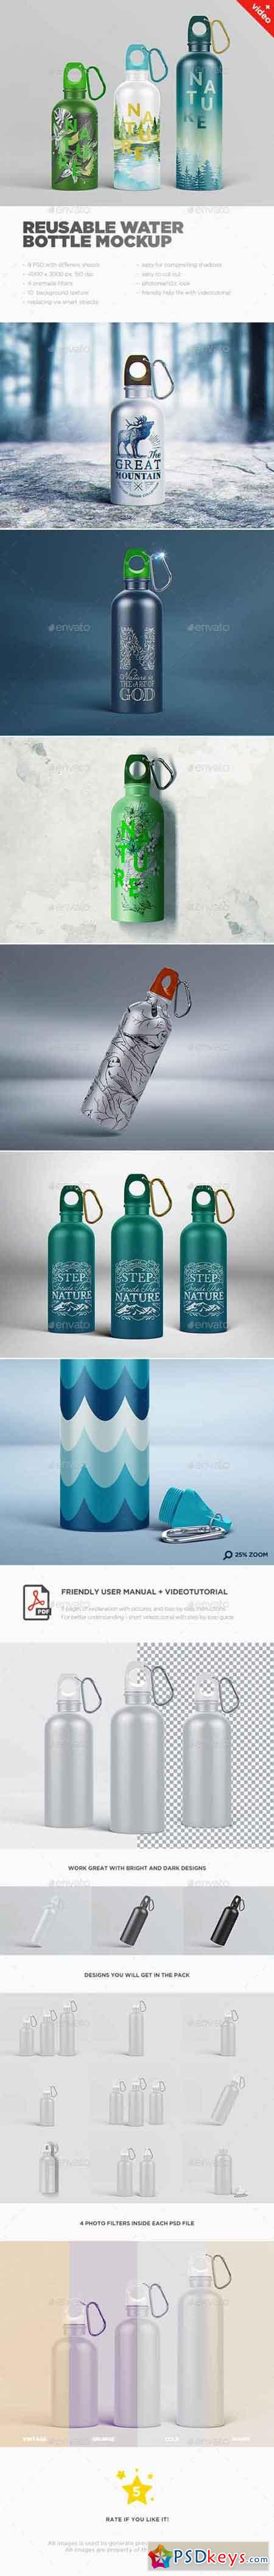 Reusable Water Bottle MockUp 16693550